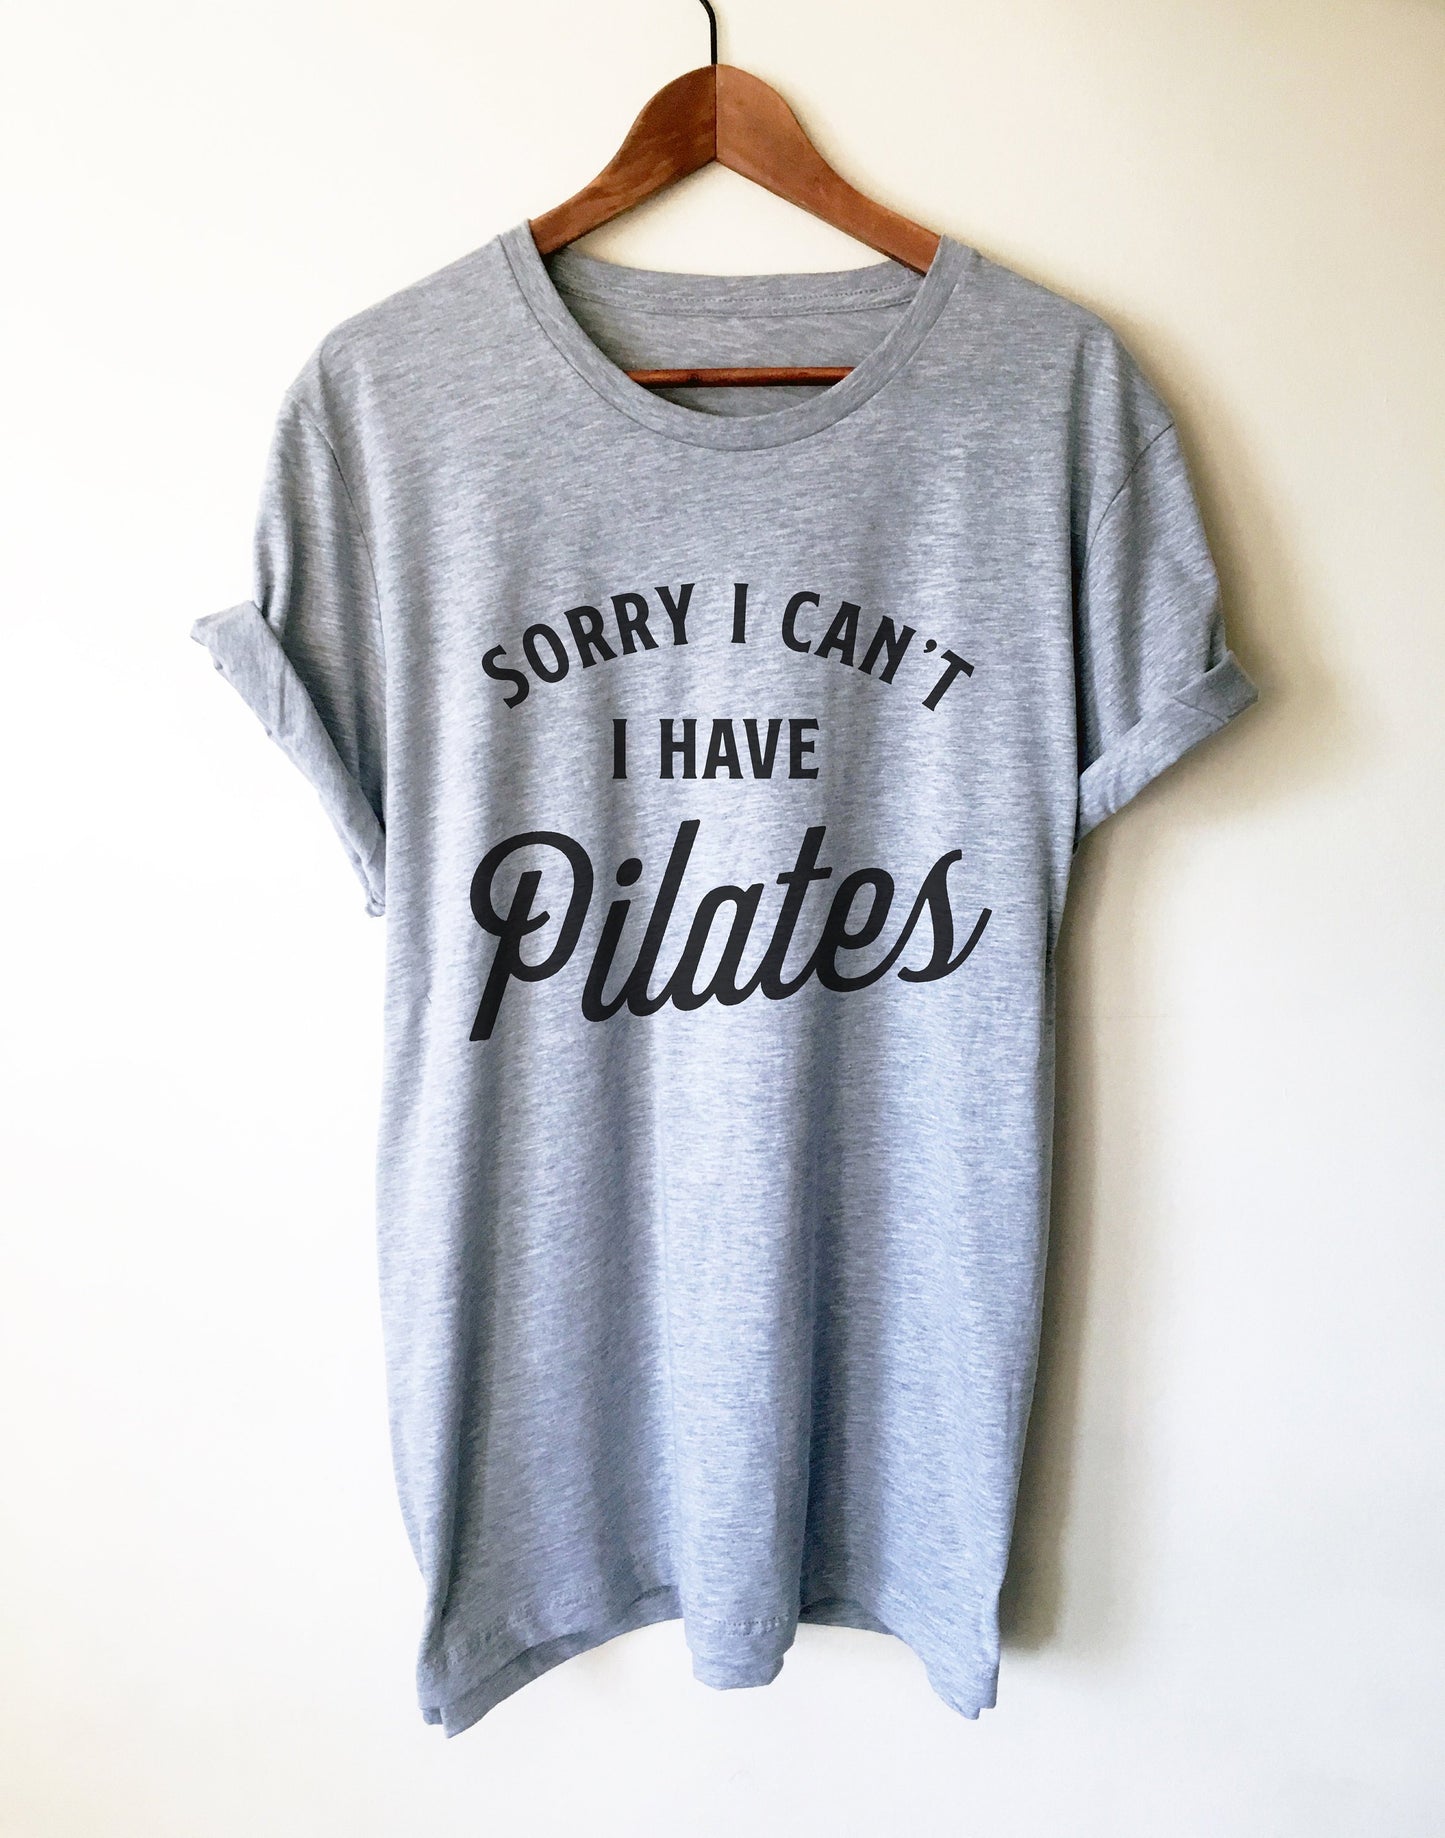 Sorry I Can’t I Have Pilates Unisex Shirt - Pilates Shirt, Pilates Gift, Pilates Clothes, Pilates Instructor, Pilates Workout